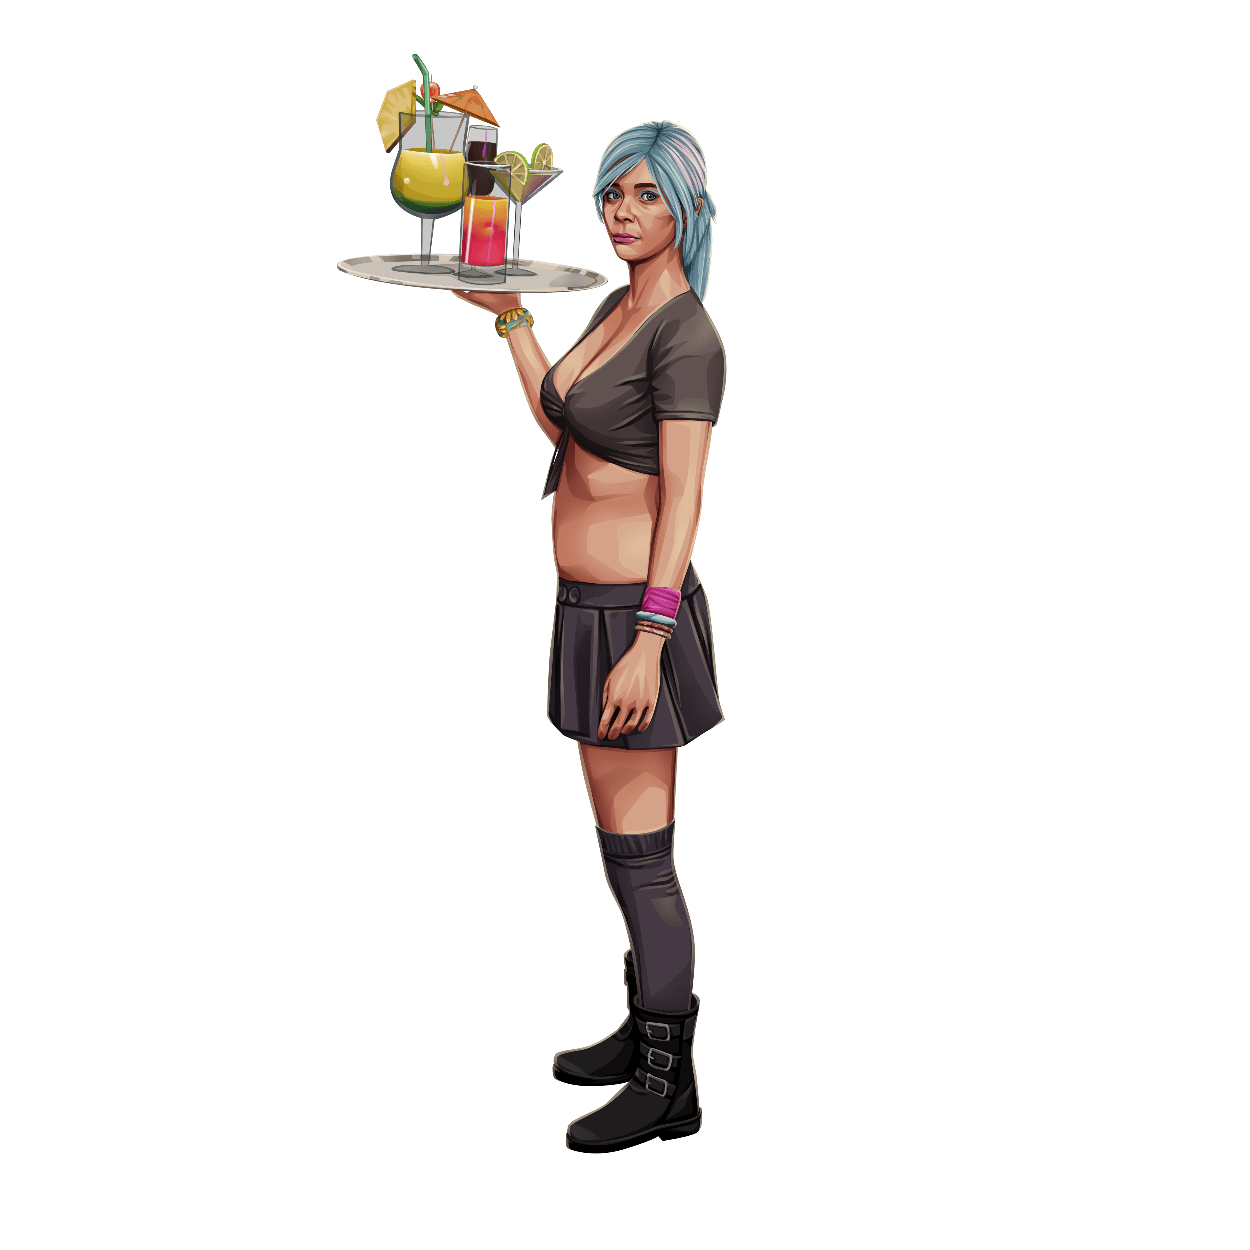 waitress character